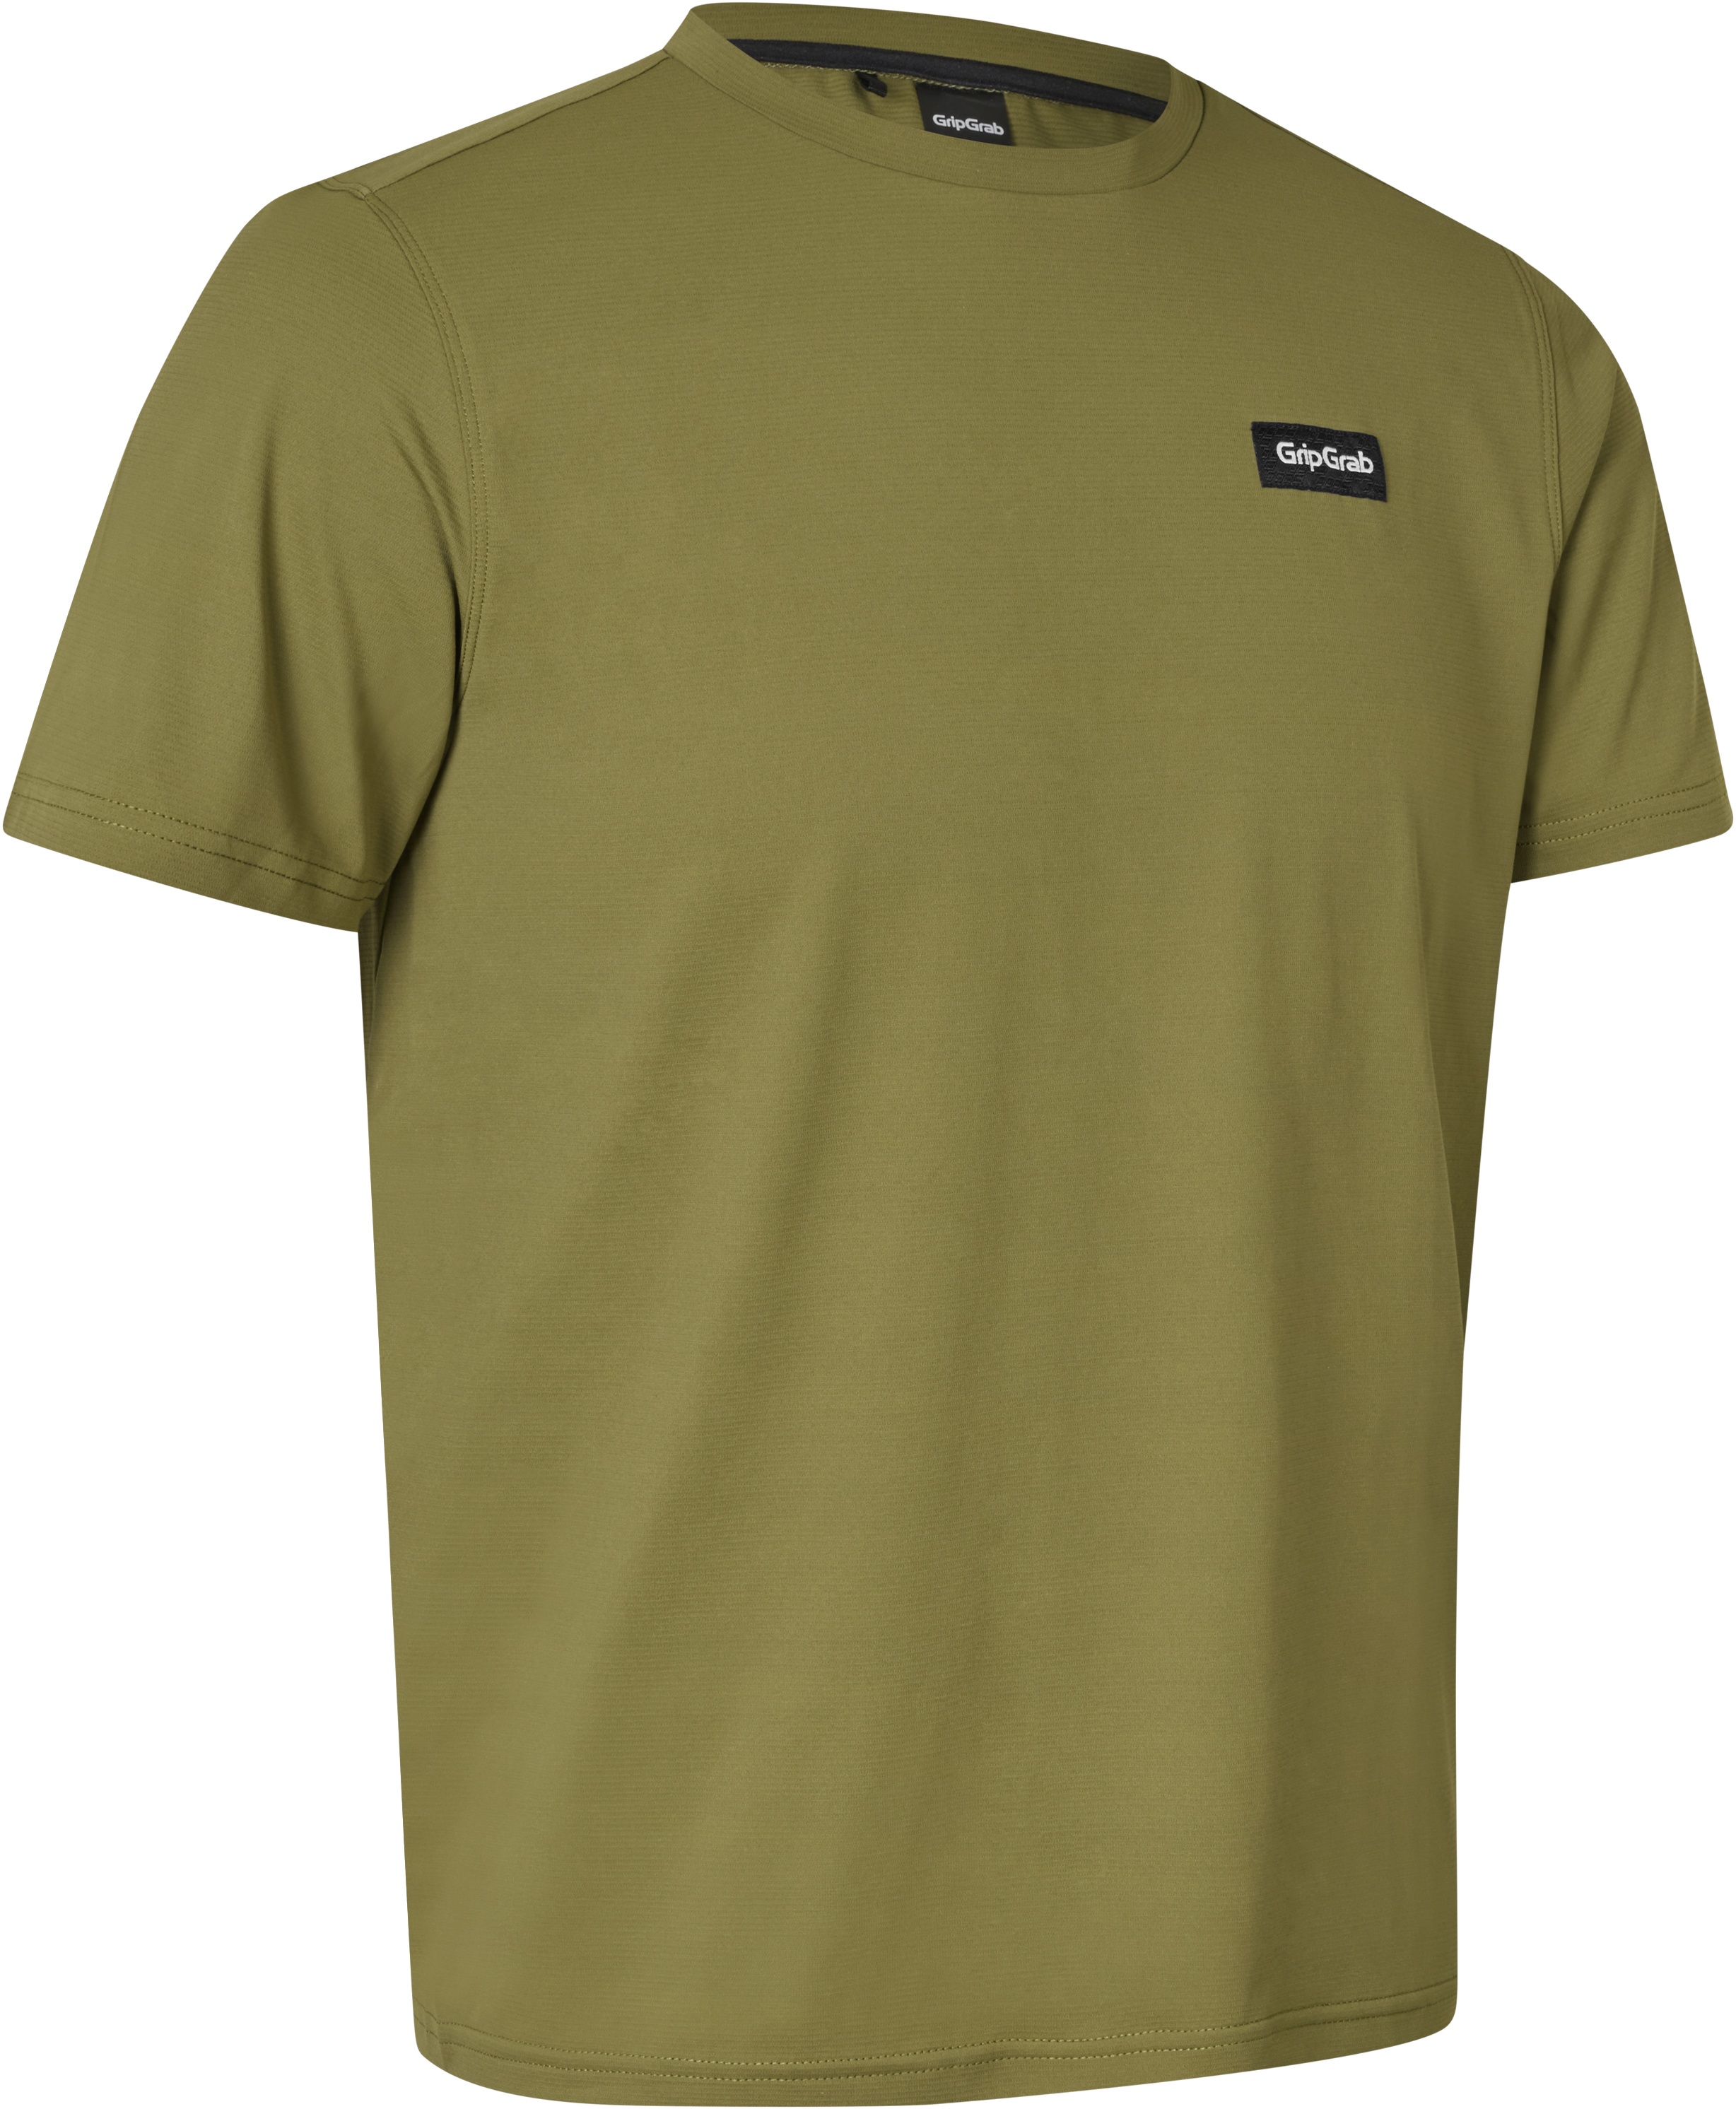 Beklædning - Merchandise - GripGrab Flow T-Shirt - Olive Green